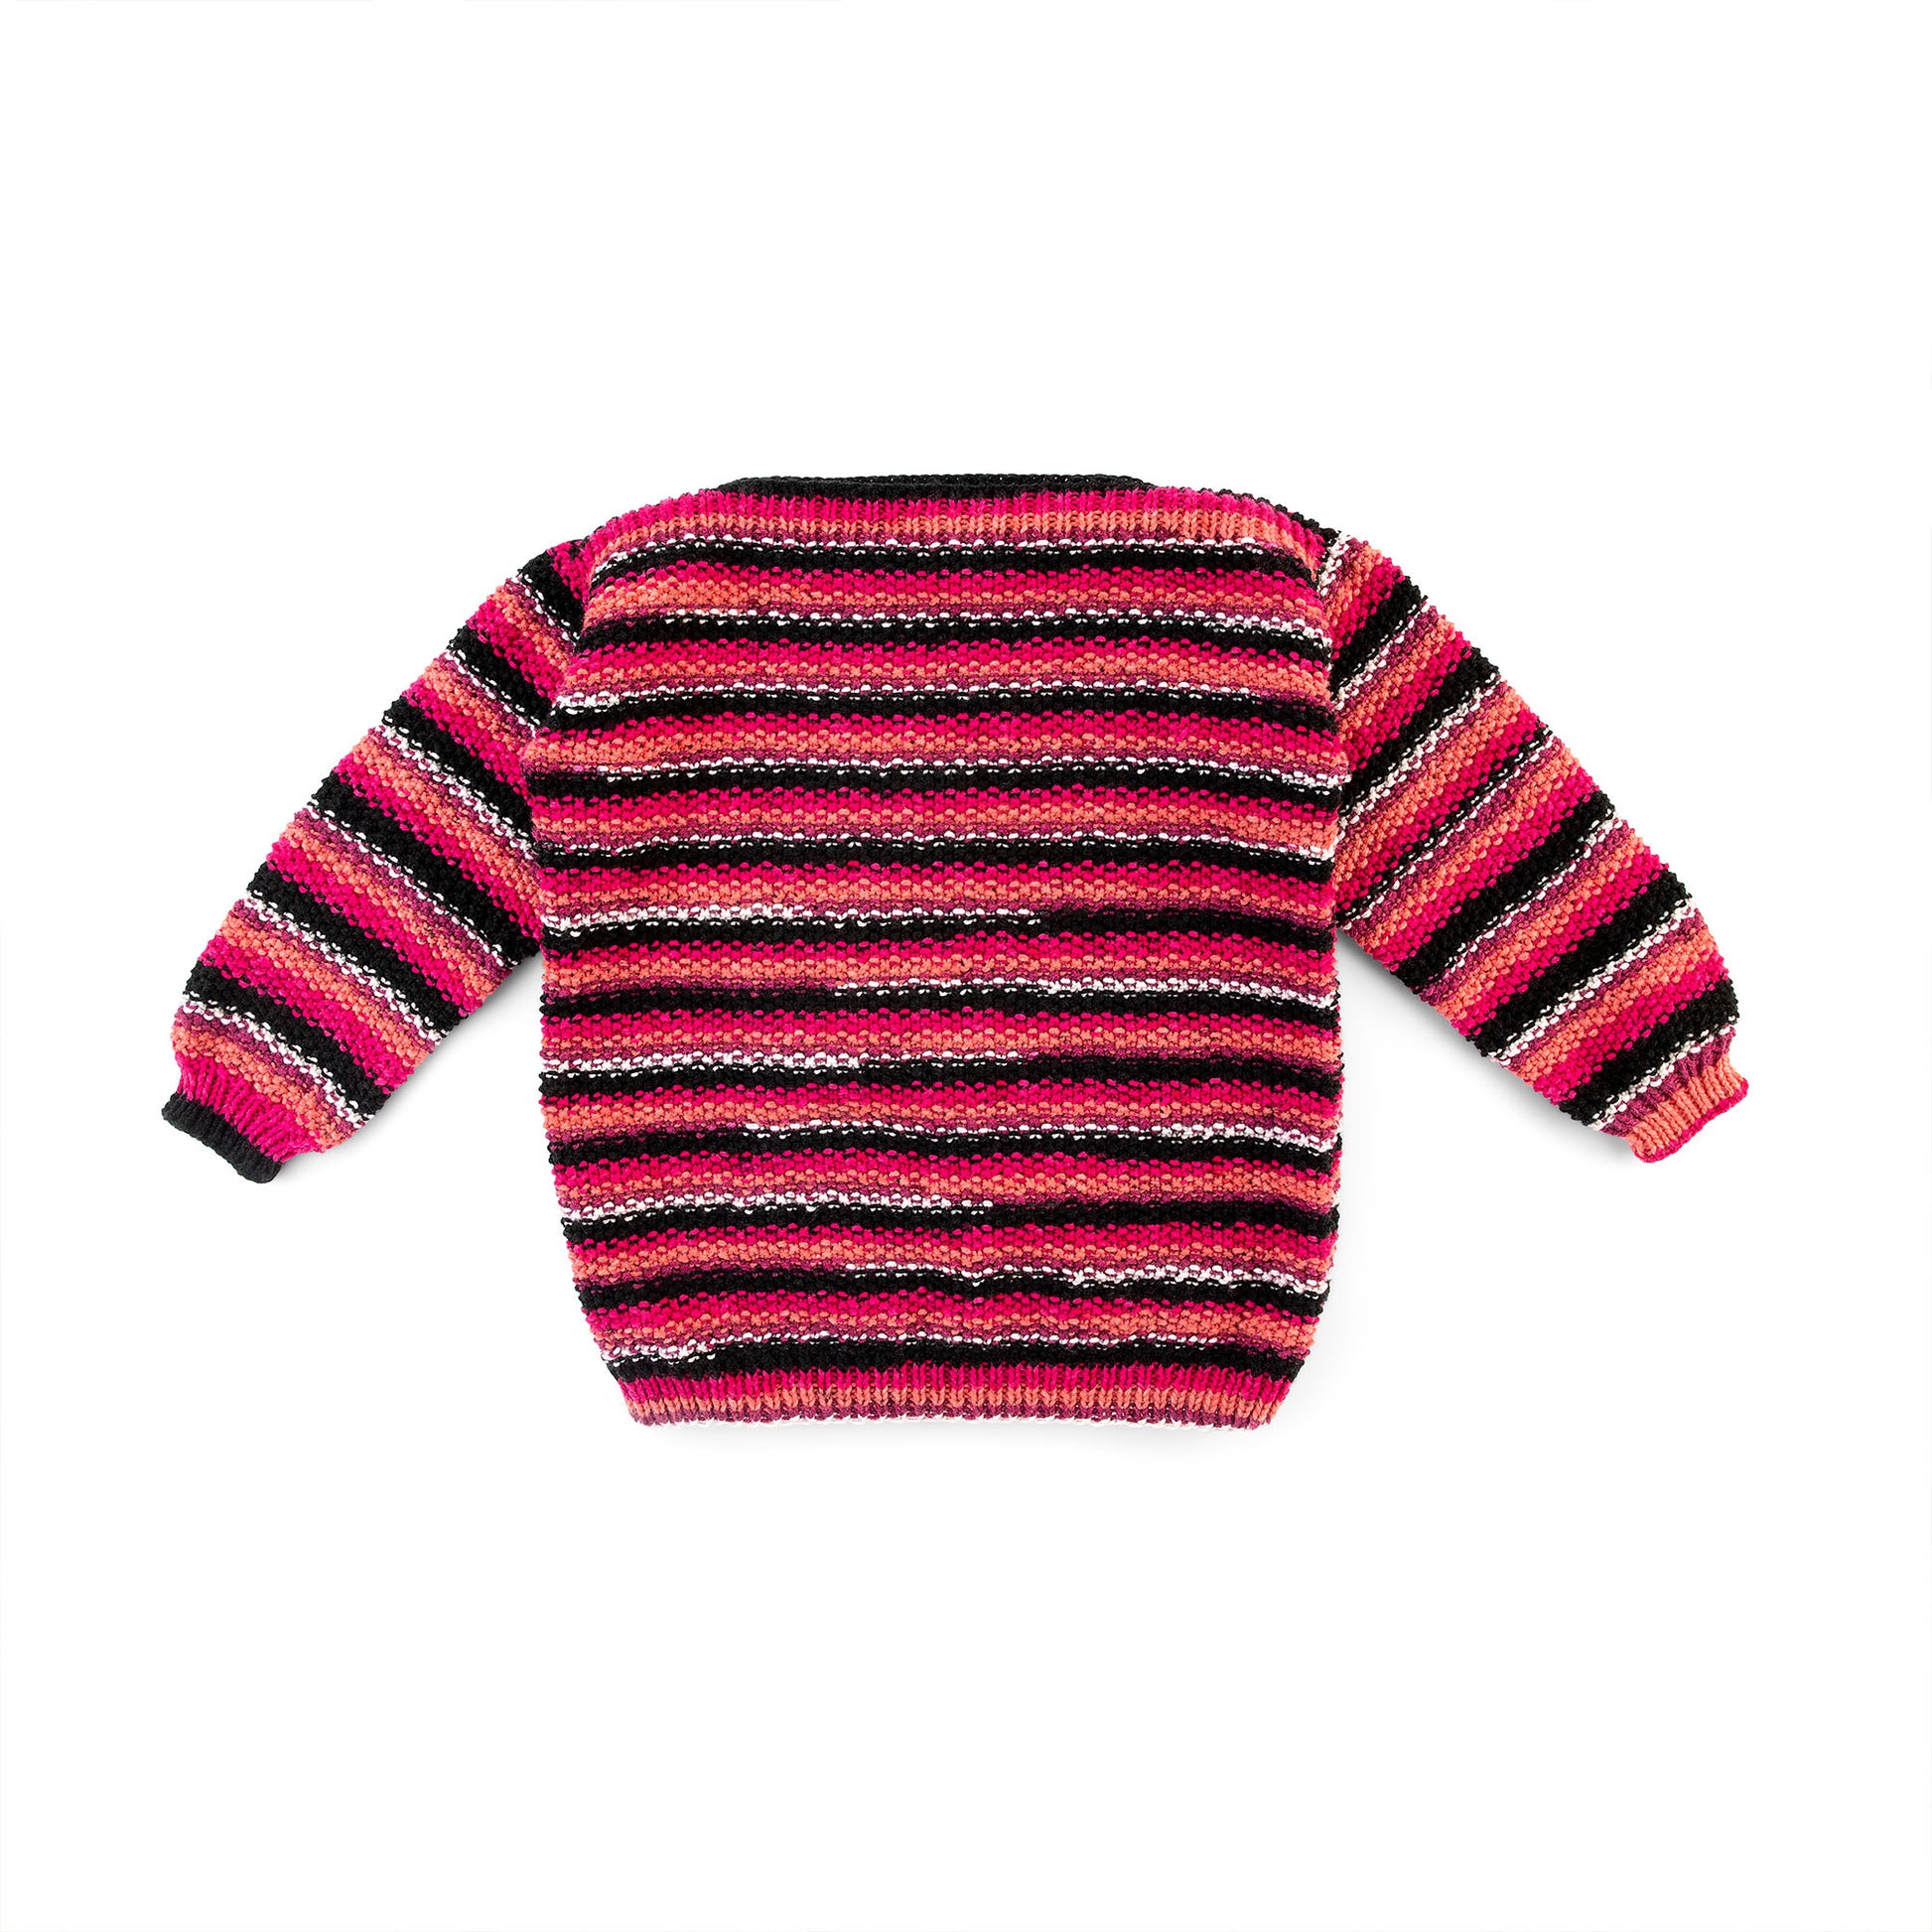 Free Red Heart Easy Stripes Knit Sweater Pattern